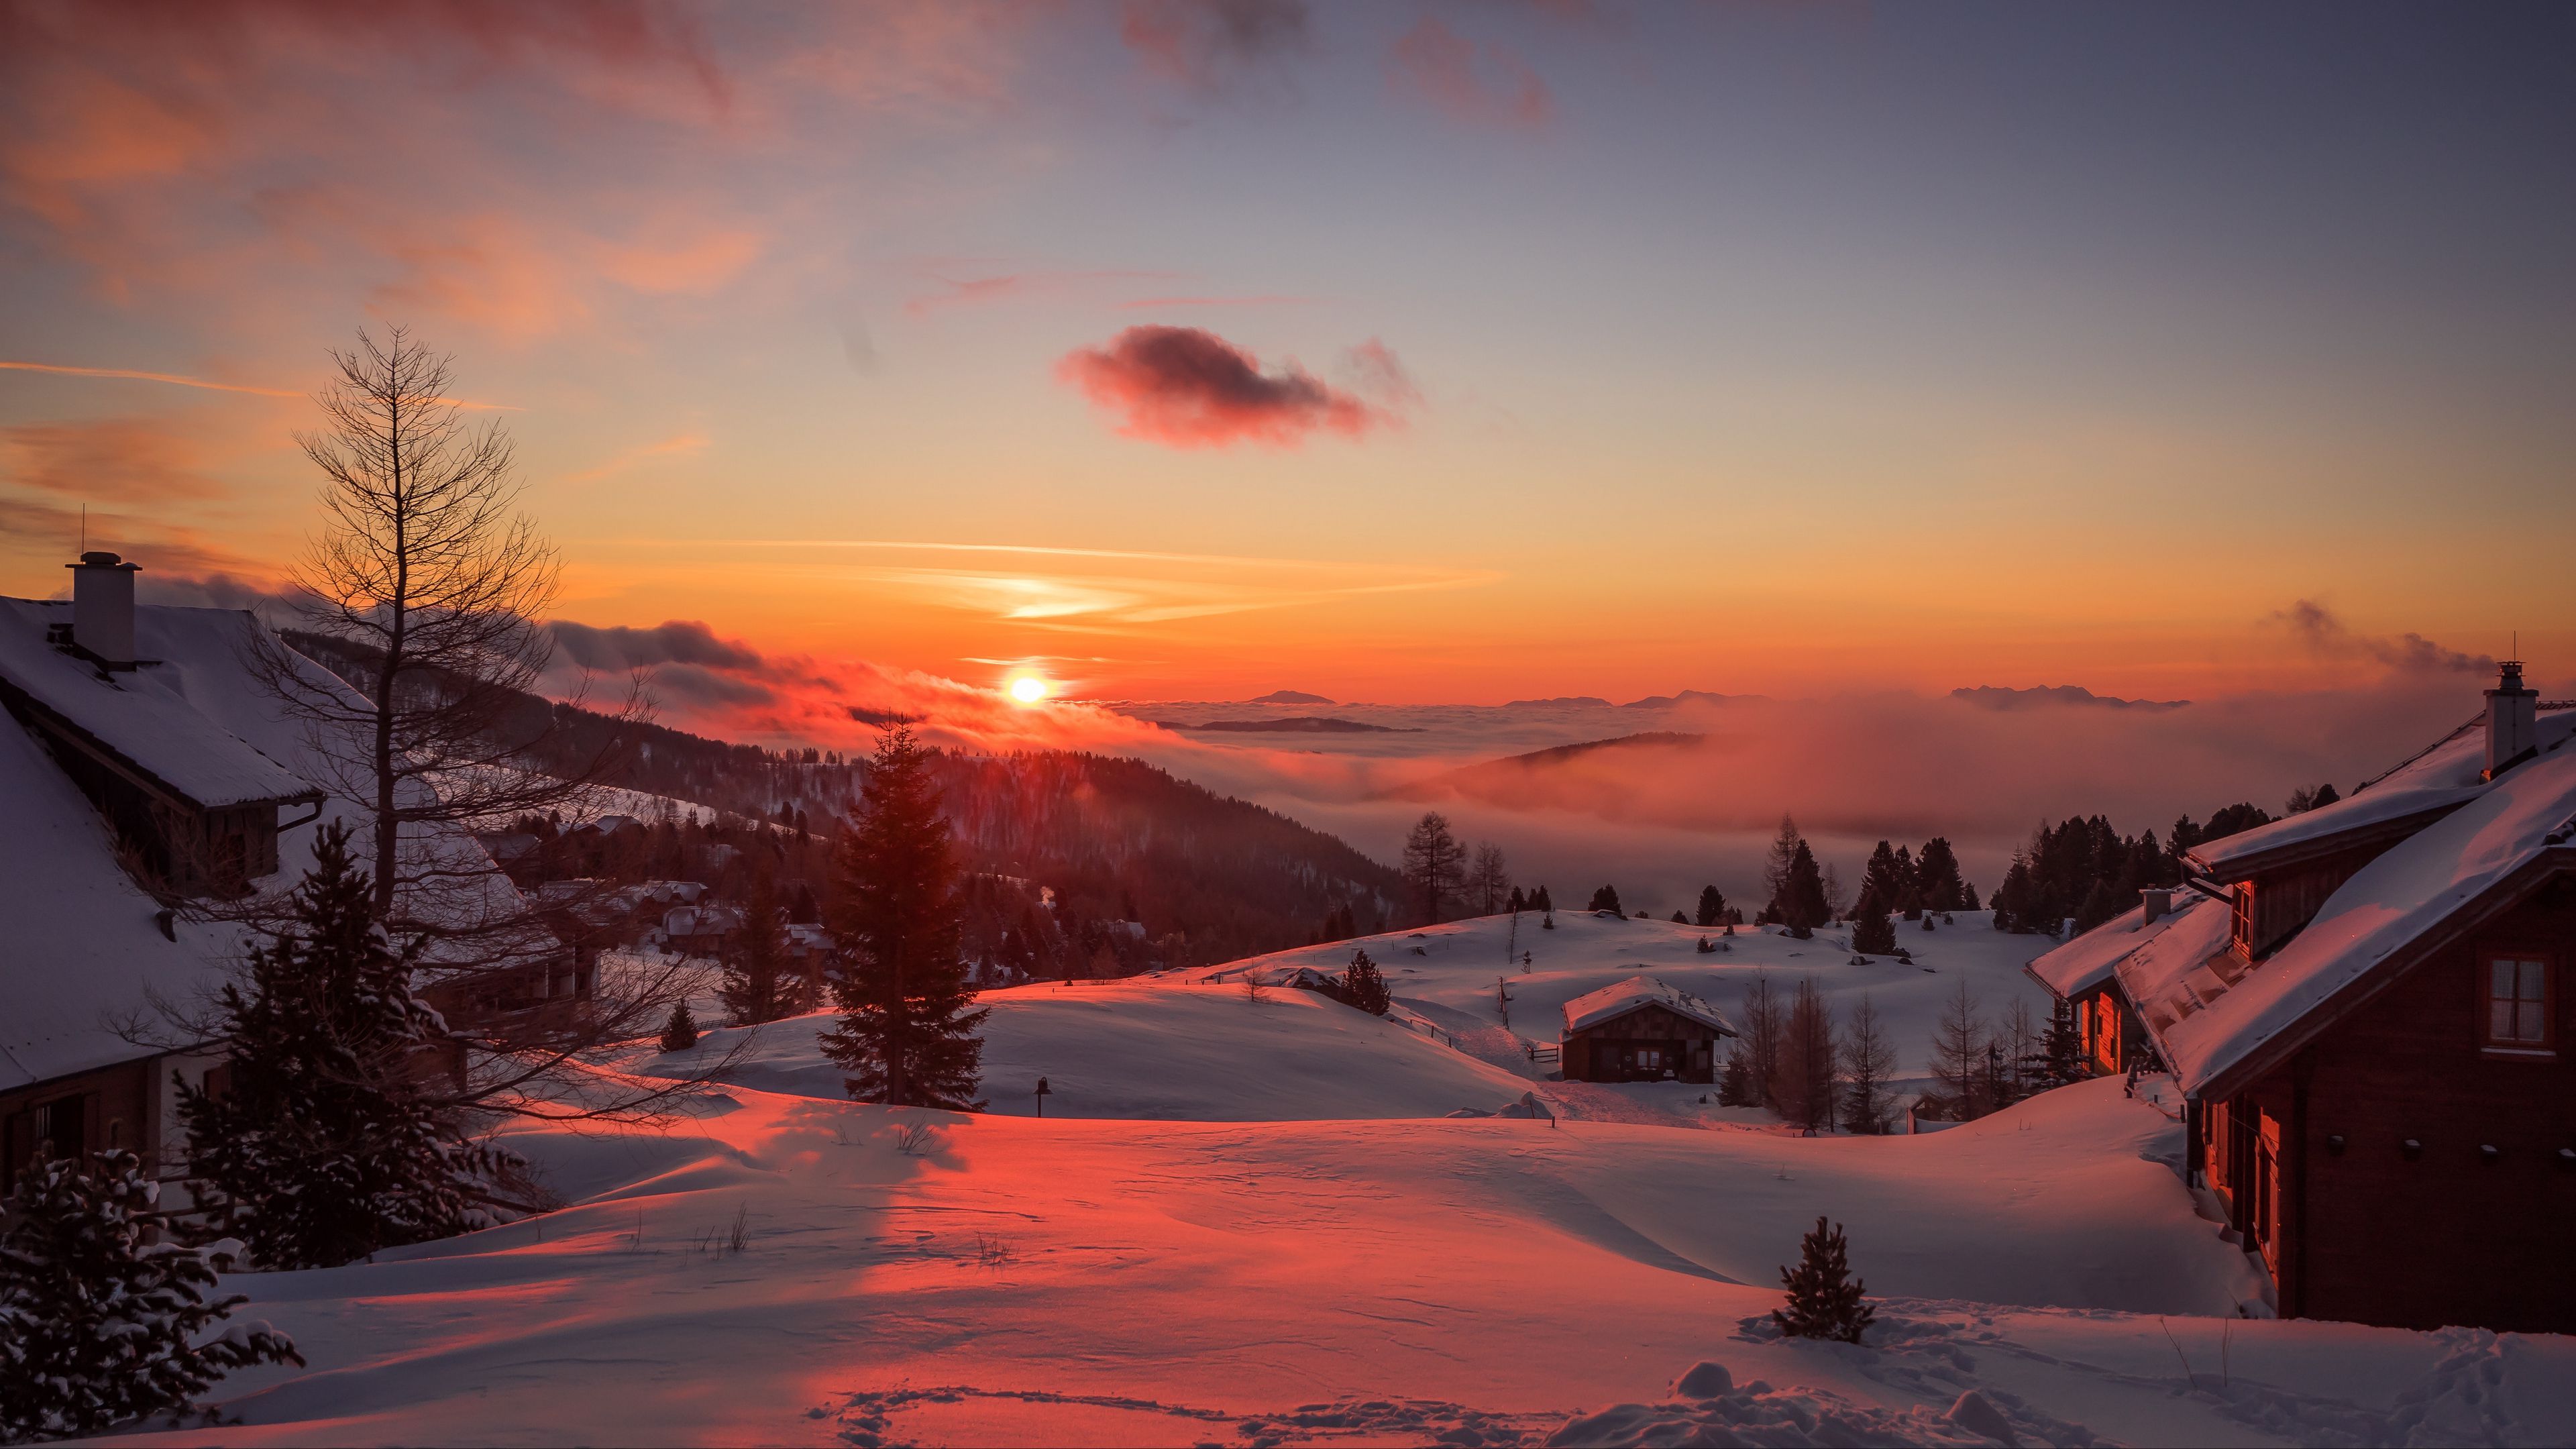 Download wallpaper 3840x2160 mountains, winter, sunset, trees, austria 4k uhd 16:9 HD background